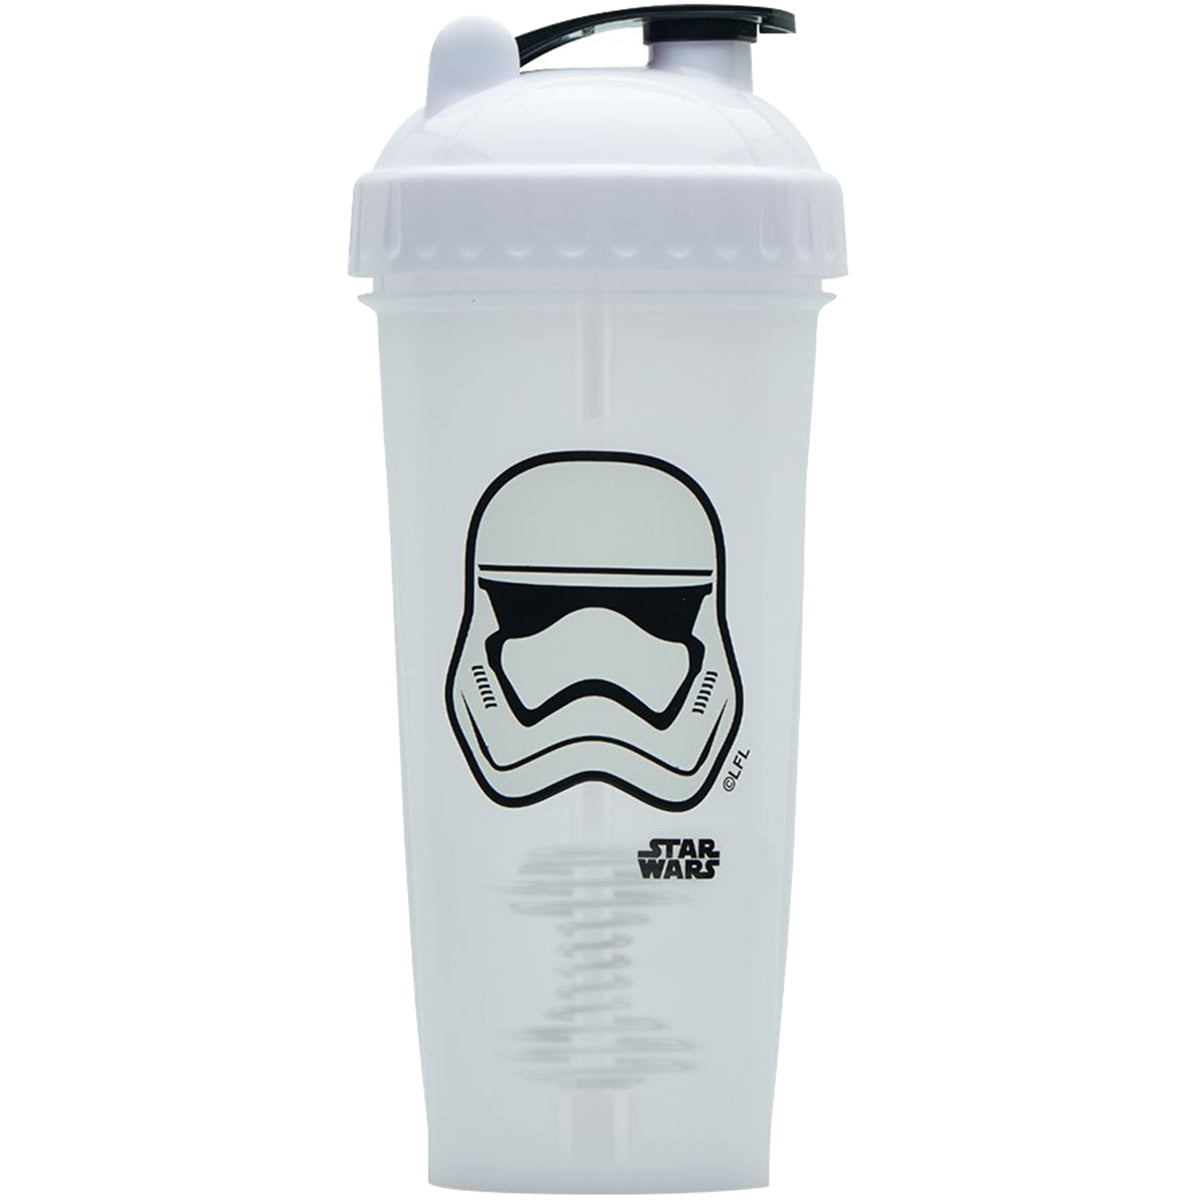 Performa PerfectShaker 28 oz. Star Wars Shaker Bottle - First Order Stormtrooper PerfectShaker